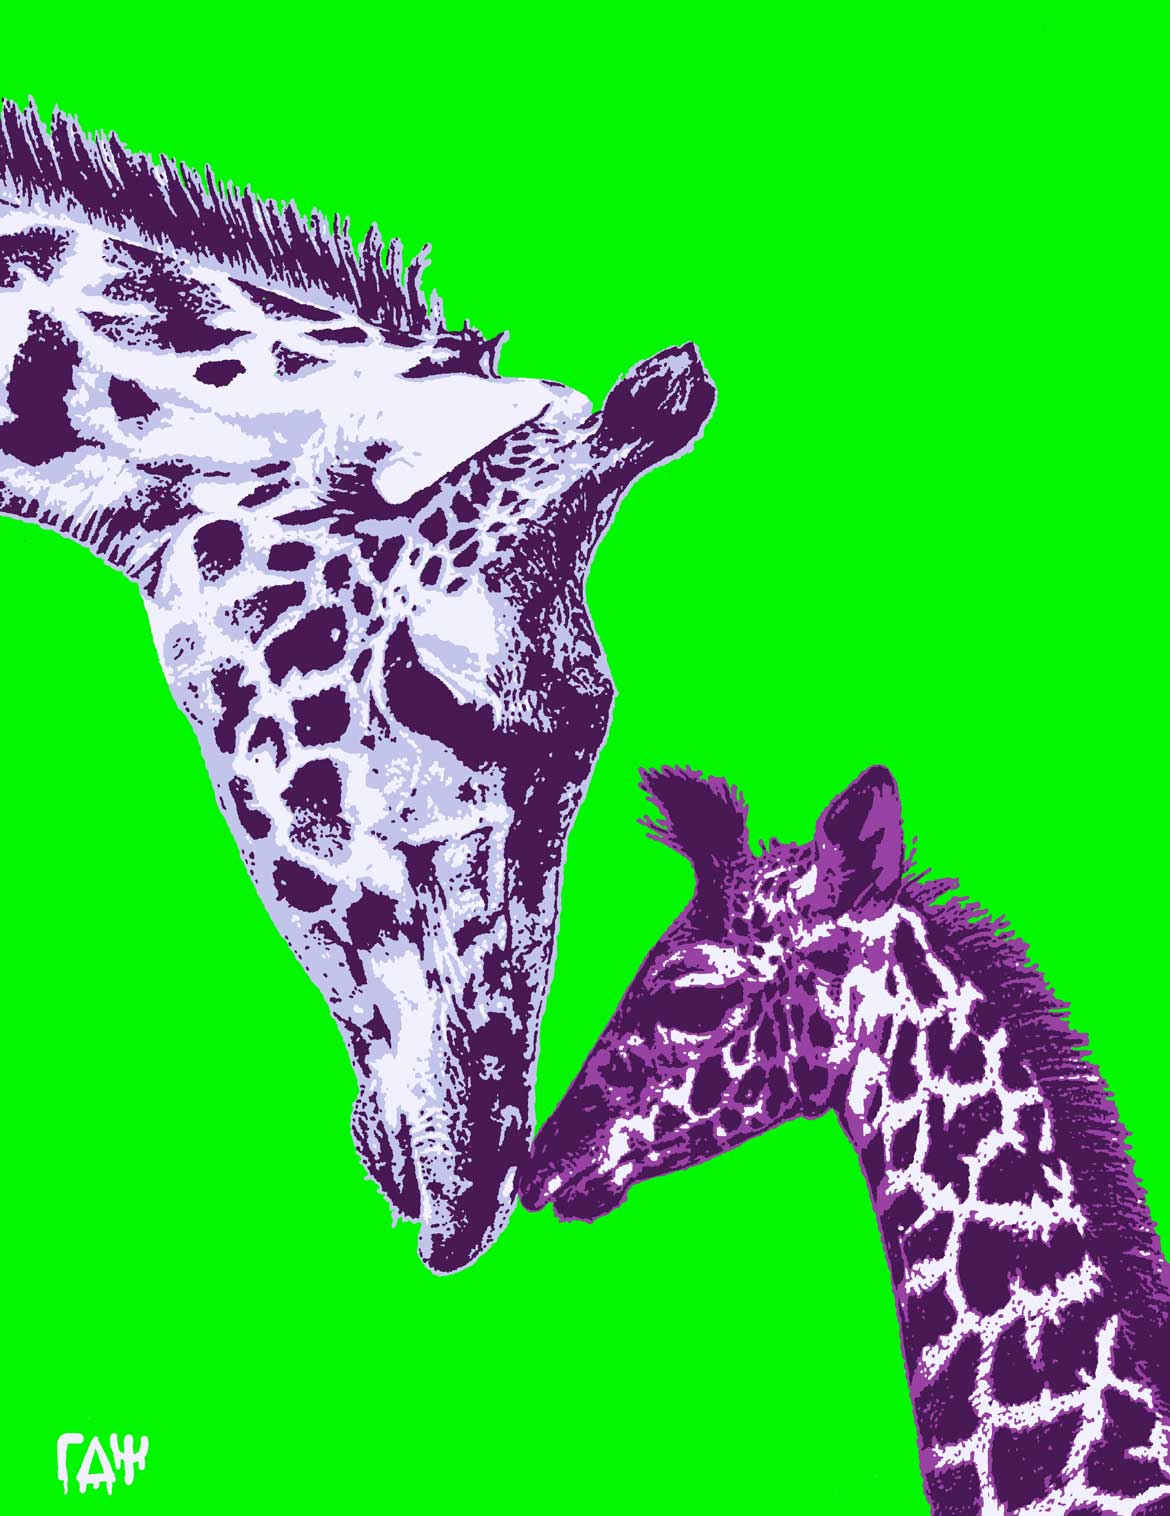 giraffes painting on green